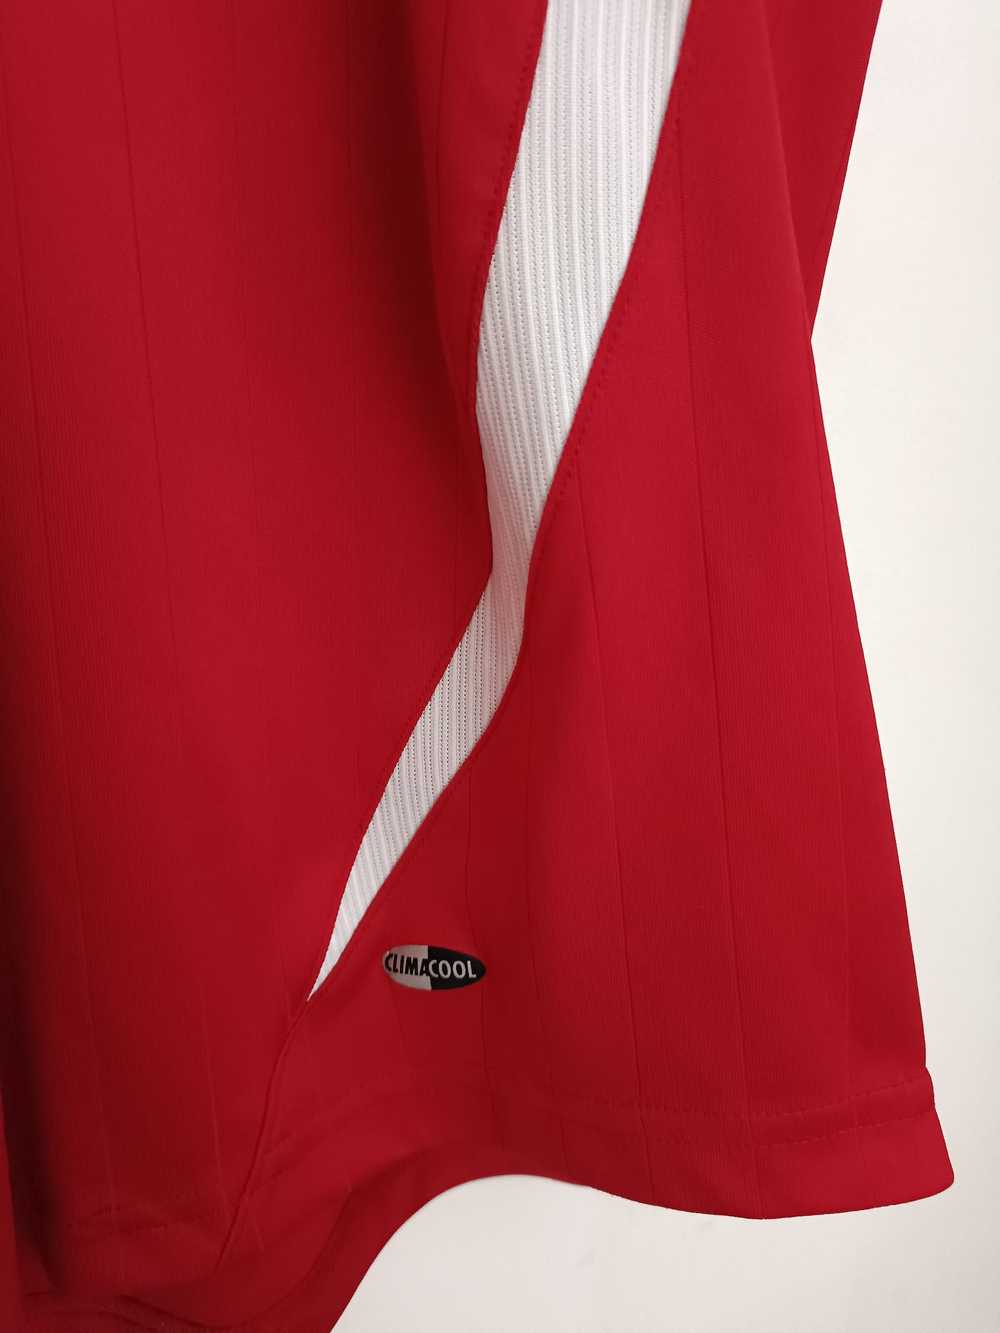 Adidas Original Vintage Denmark jersey - image 7